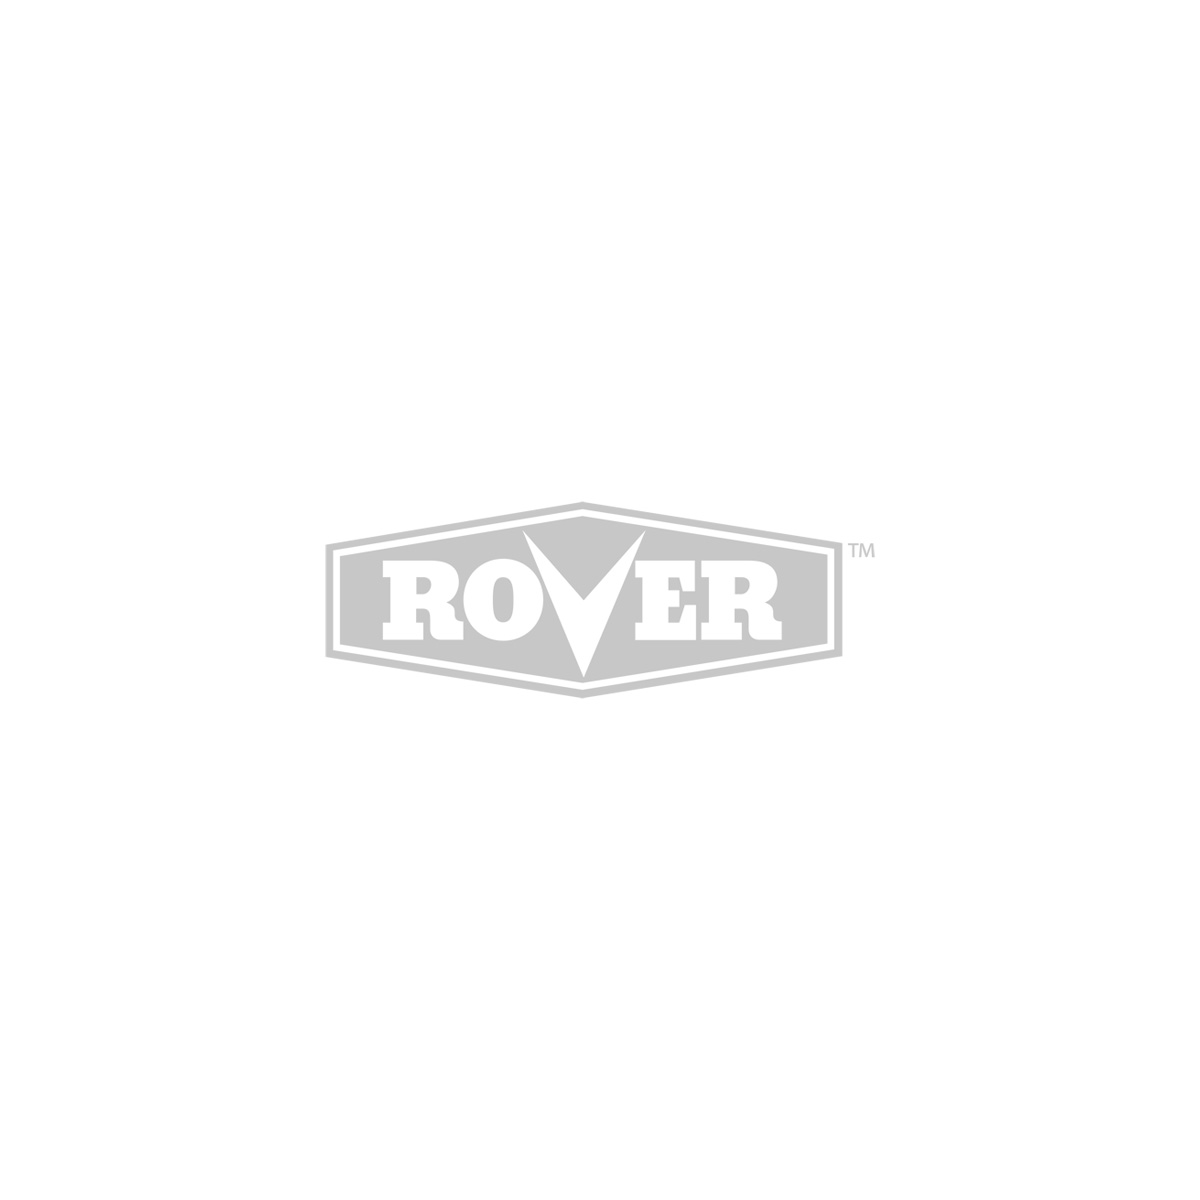 Rover Trimmer Attachments